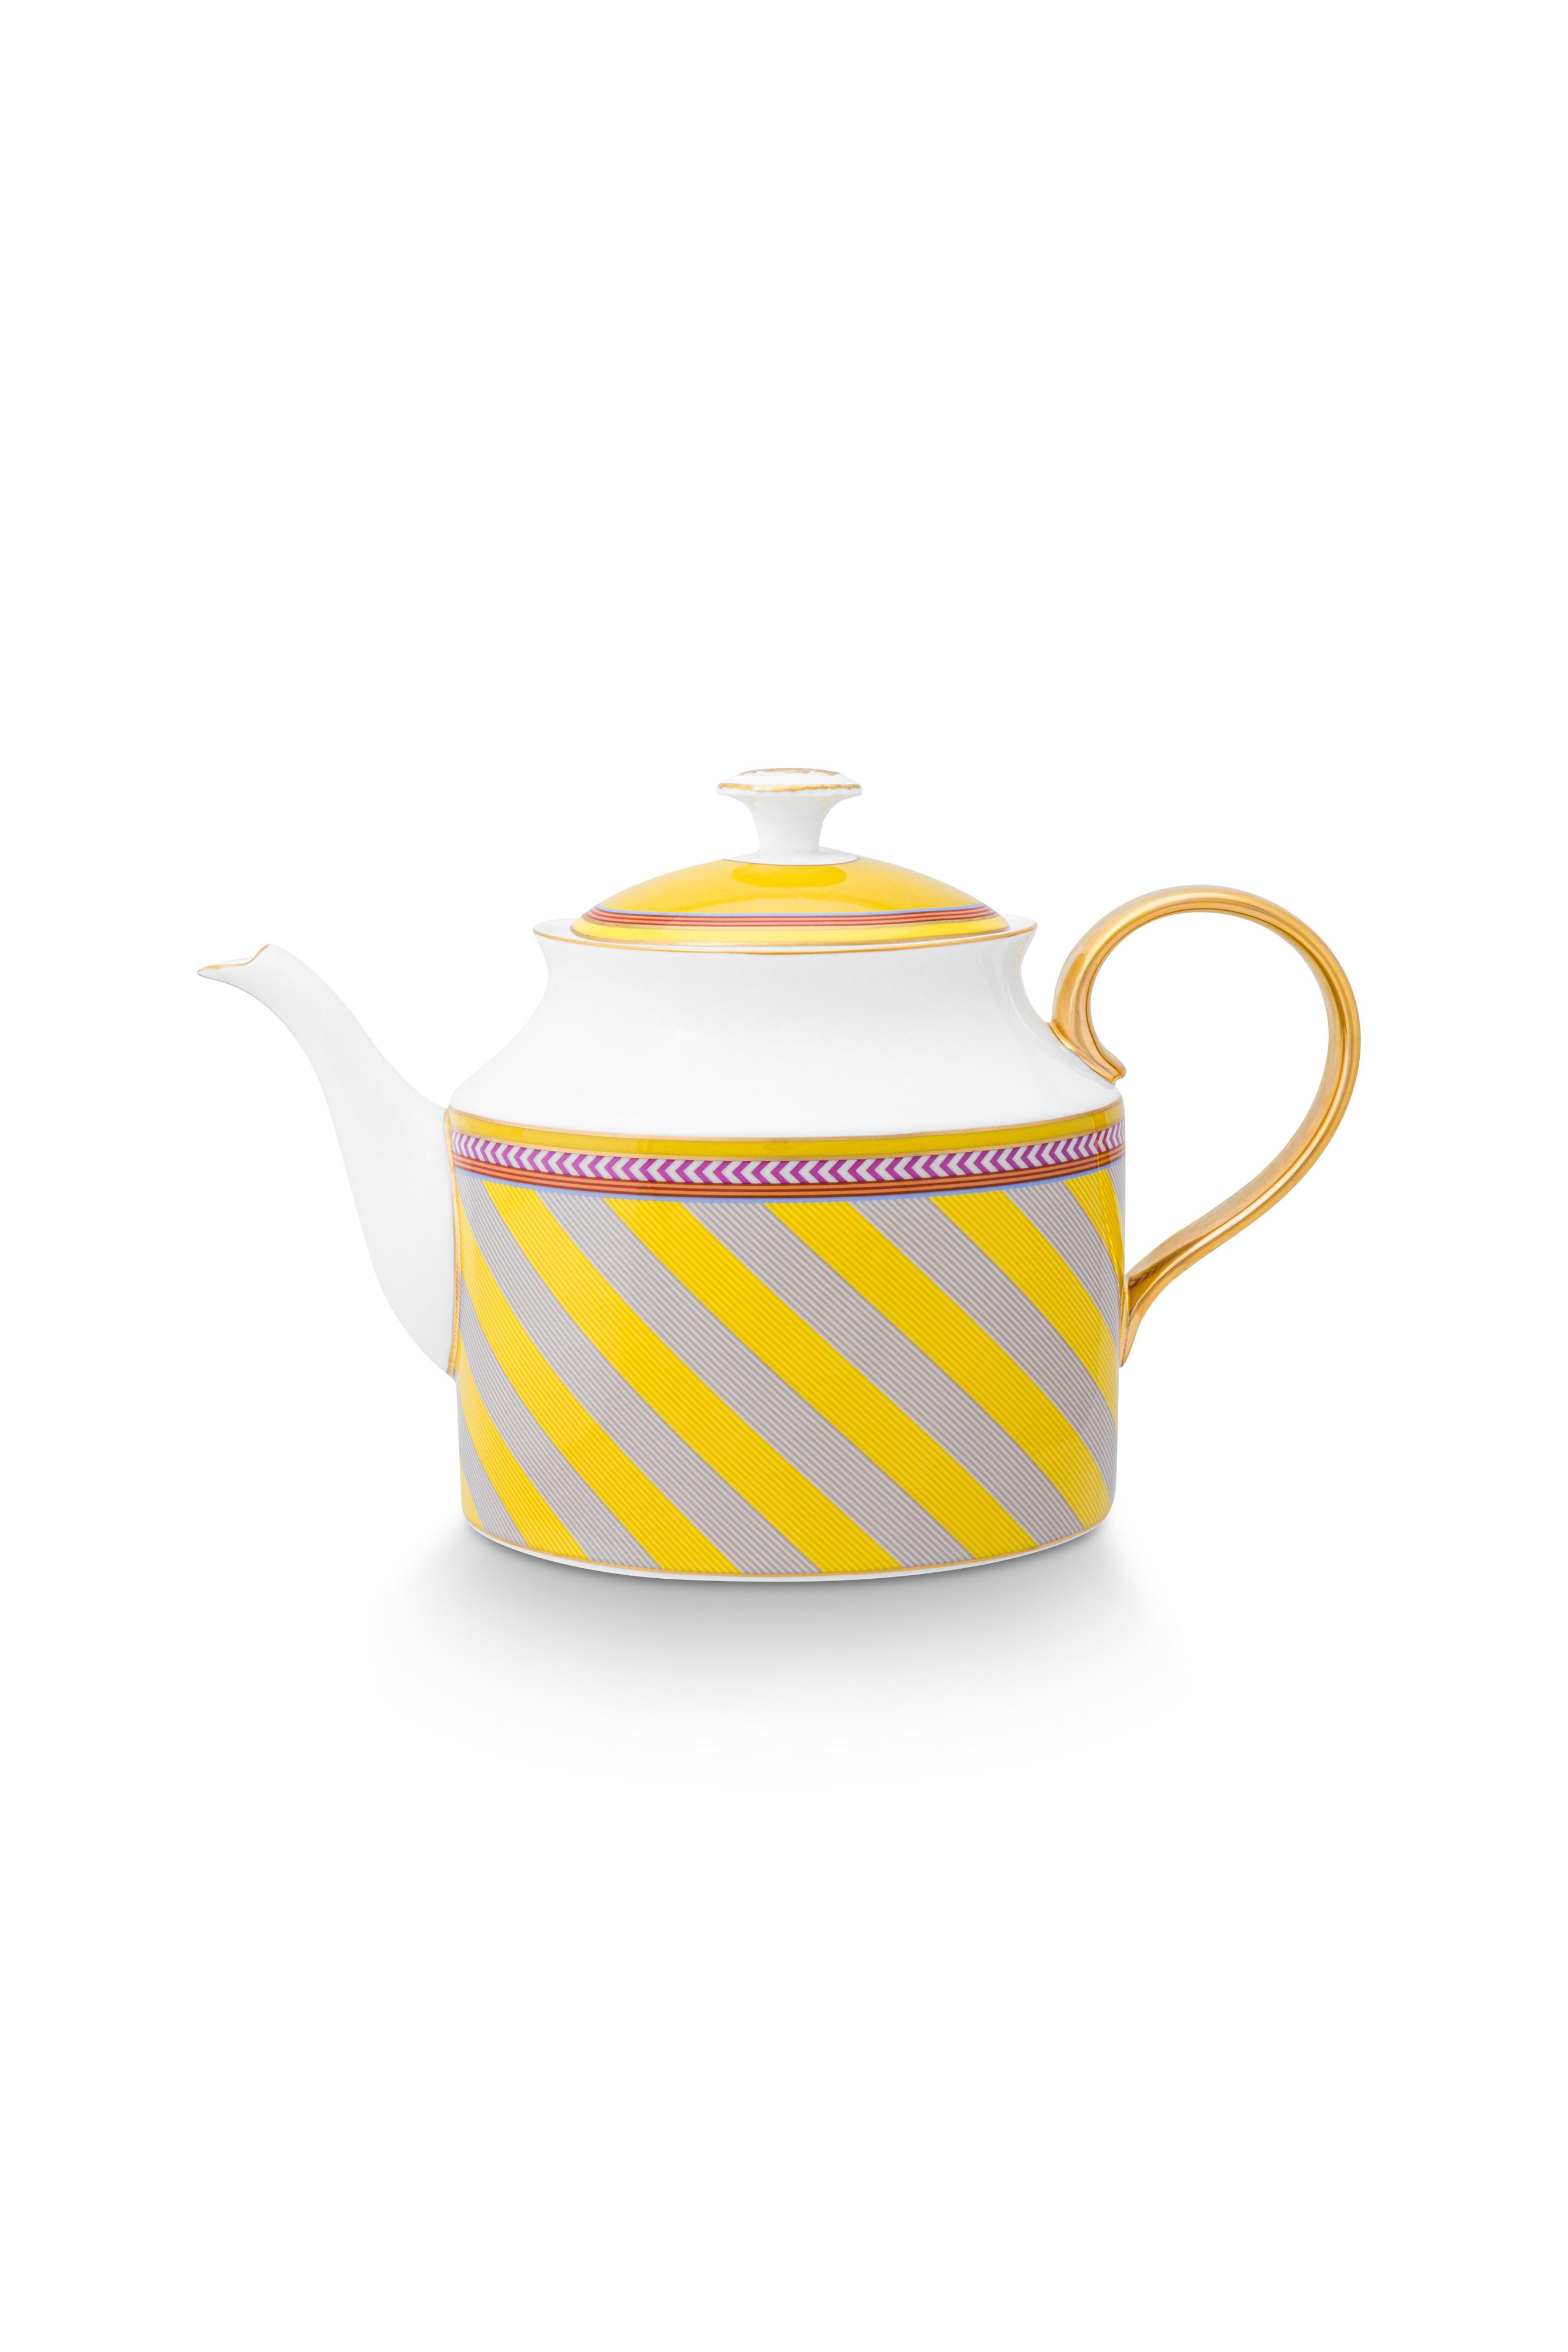 Tea Pot Large Pip Chique Stripes Yellow 1.8ltr Gift